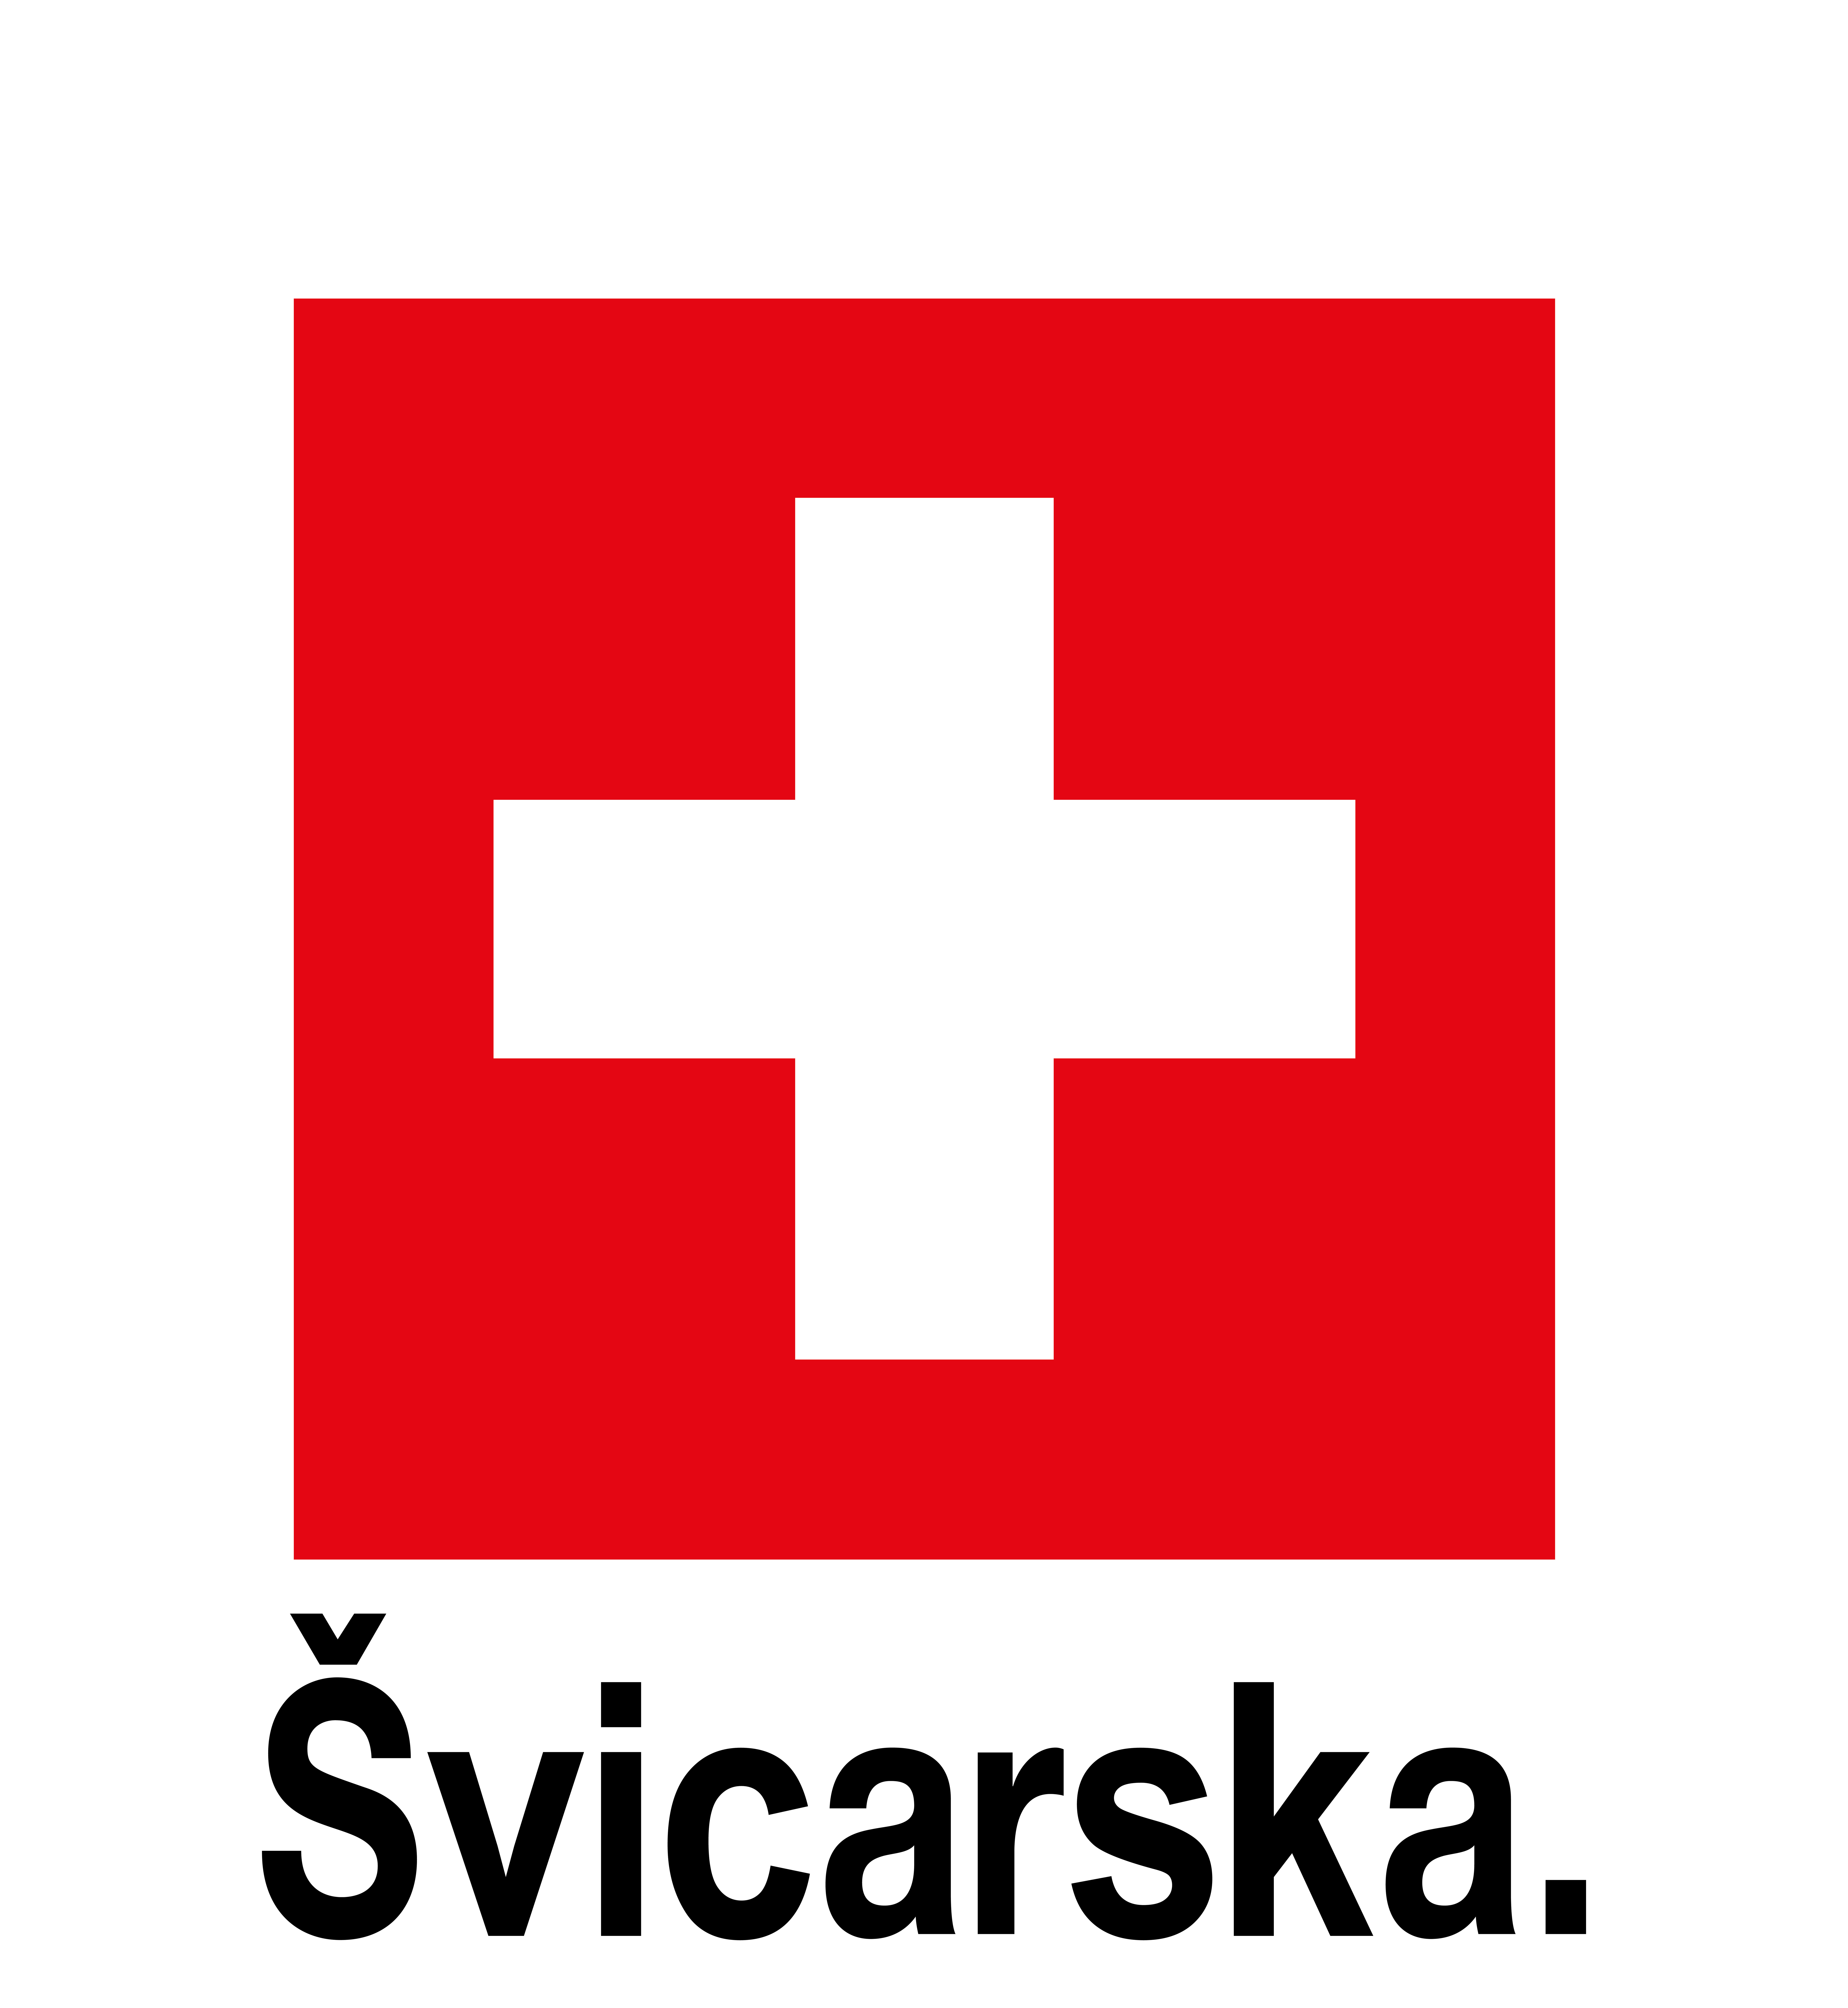 Swiss embassy logo